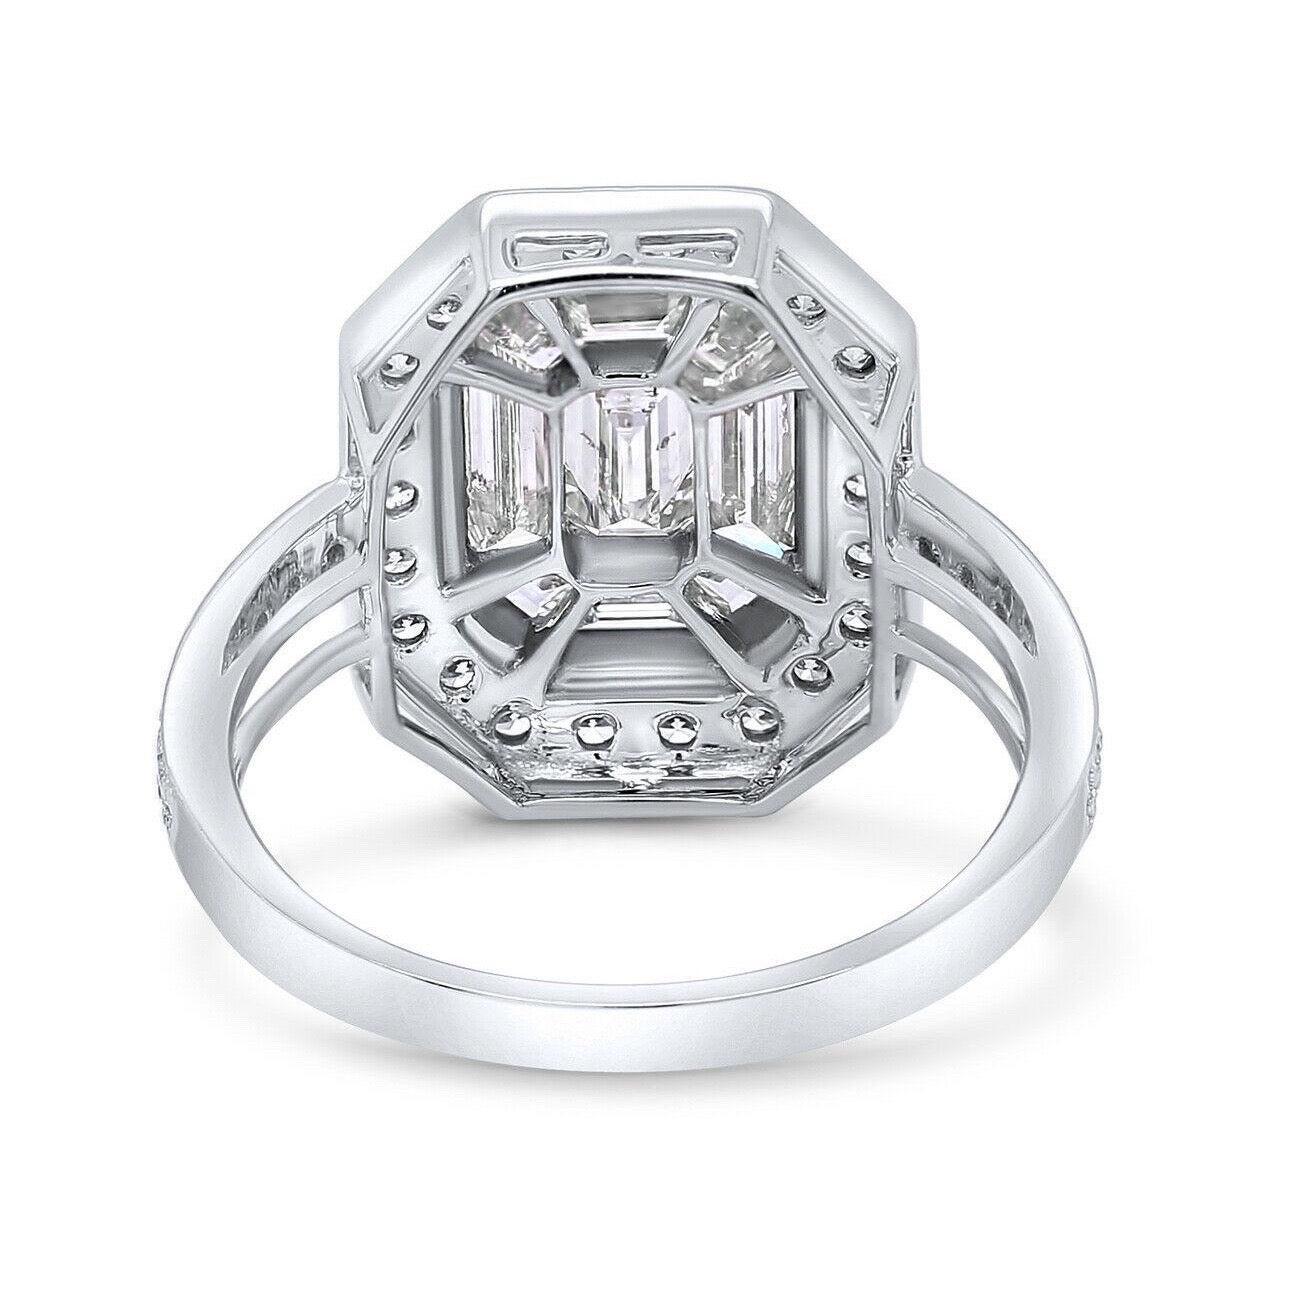 For Sale:  Certified 1.73 Carat Emerald Cut Diamond 14 Karat White Gold Engagement Ring 5